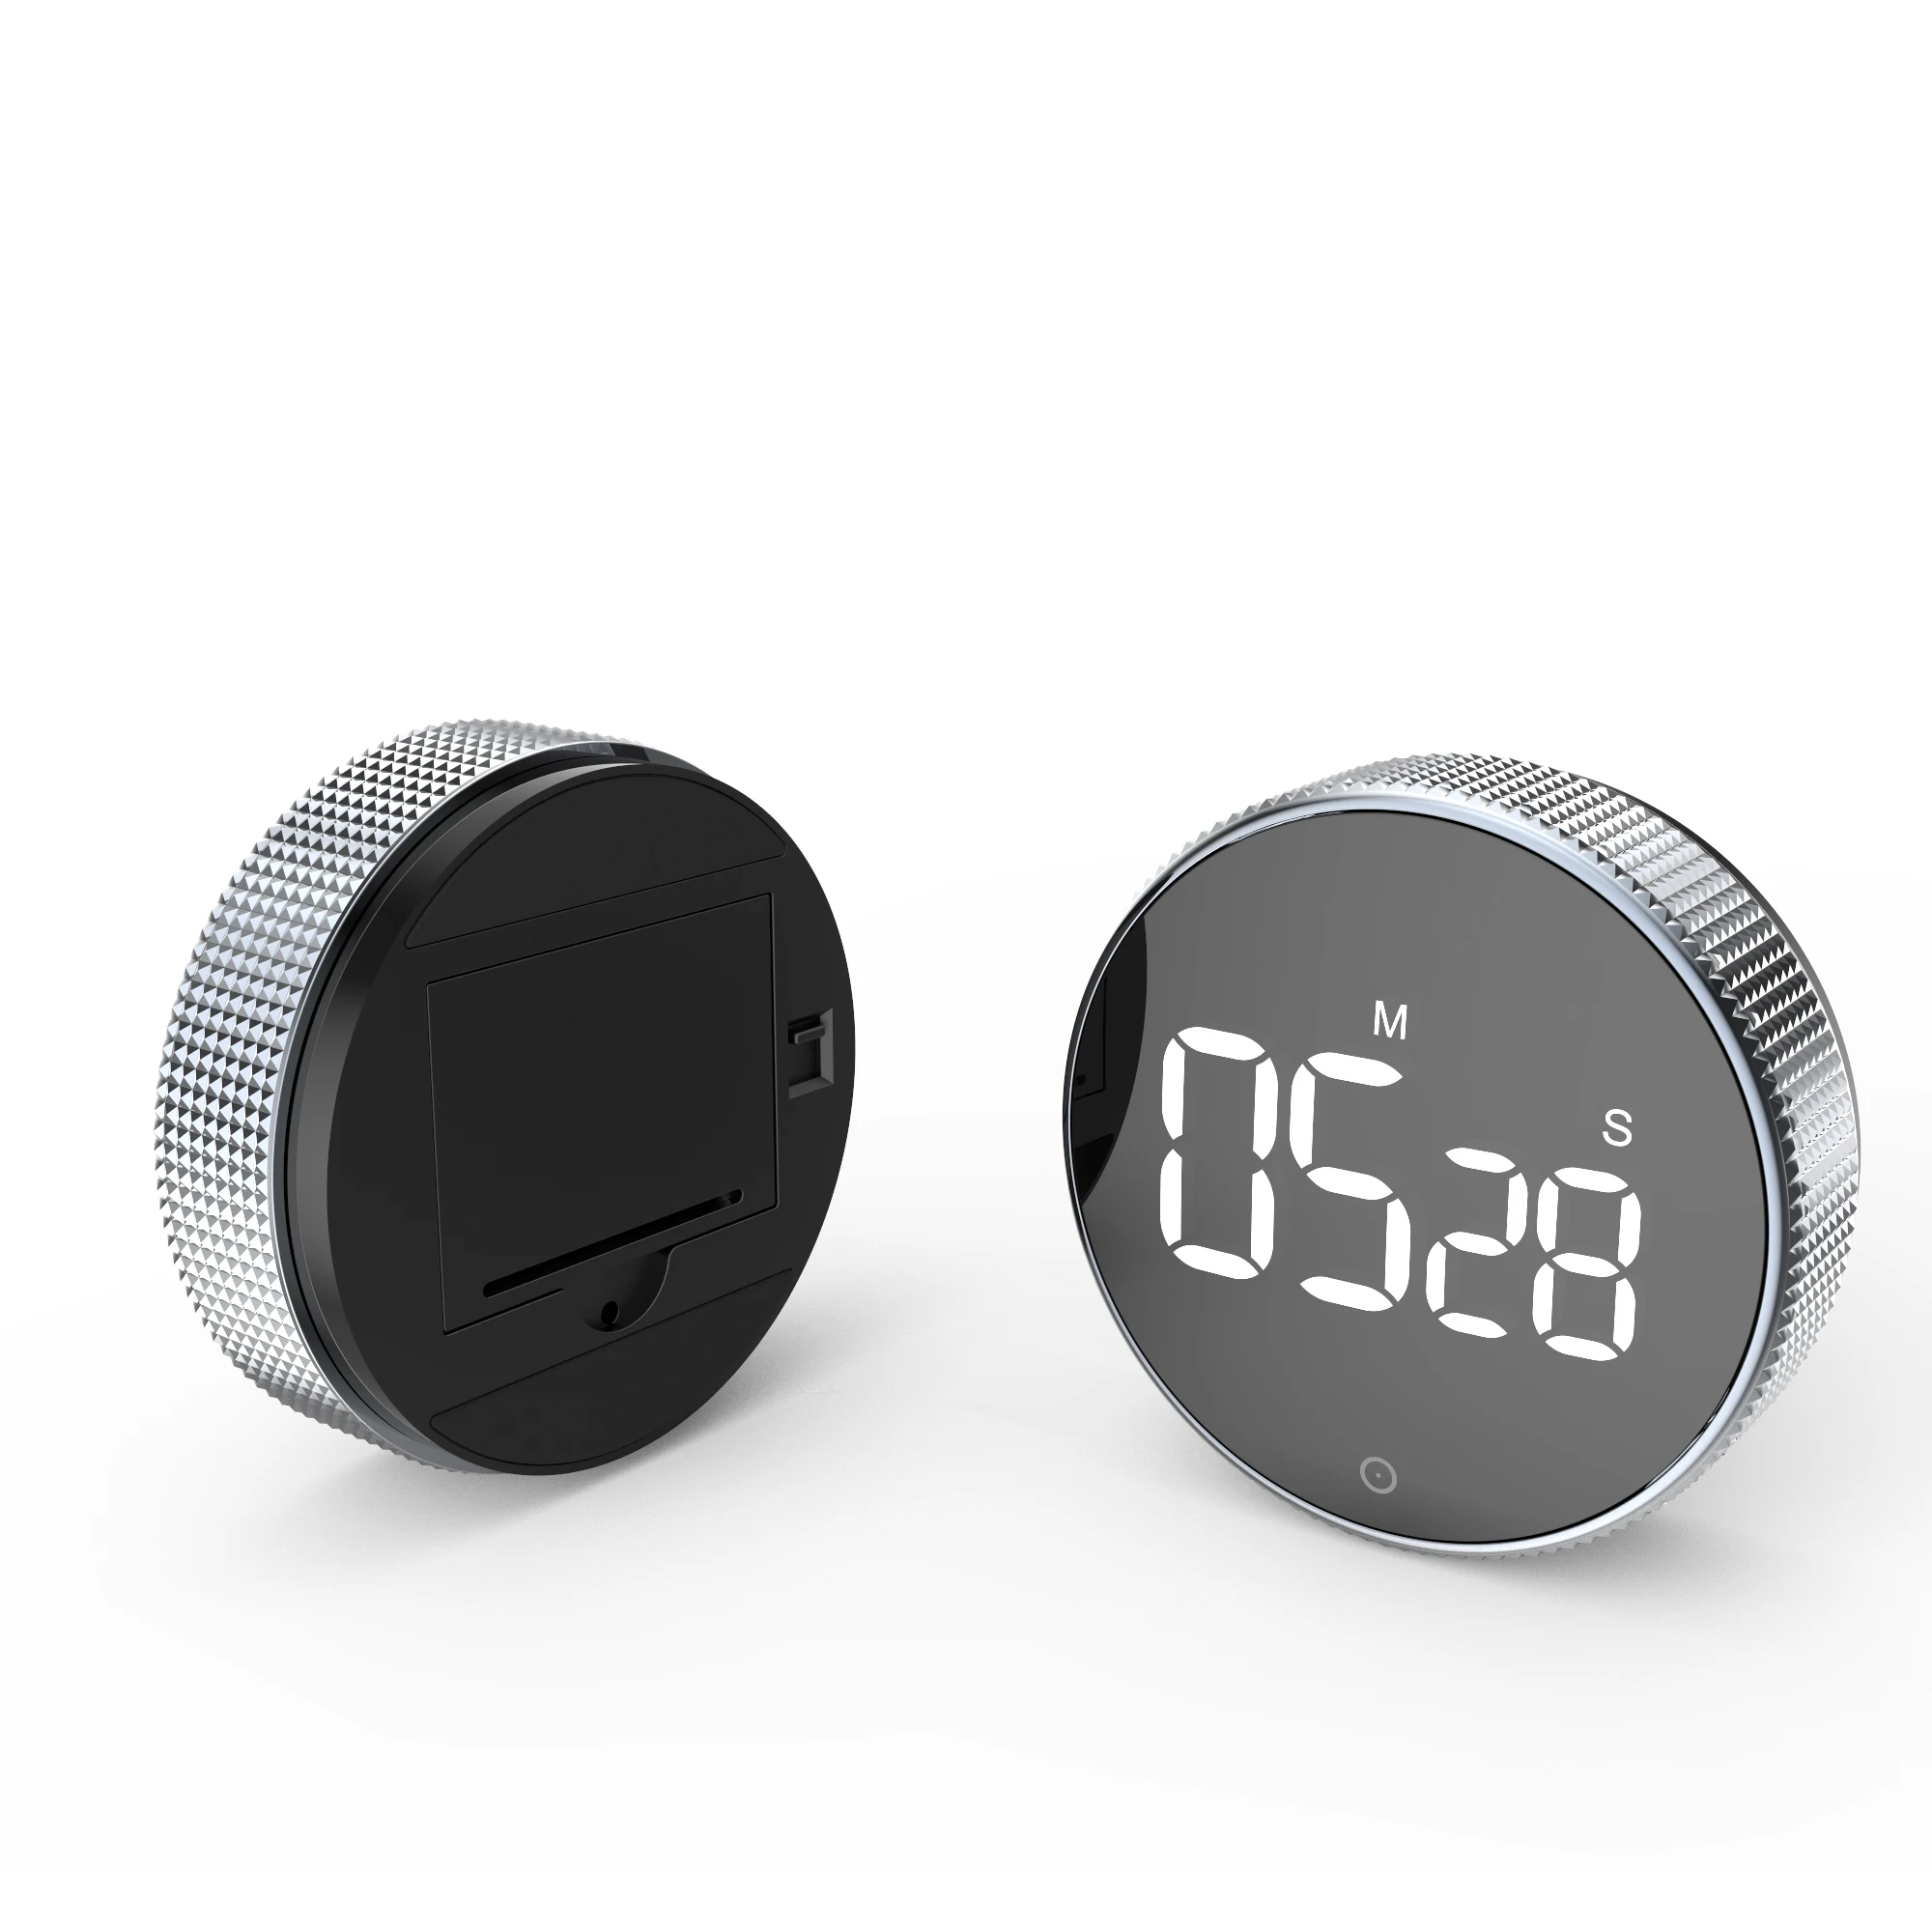 OVEKI Magnetic Countdown Digital Timer，Kitchen Timer - GREAT